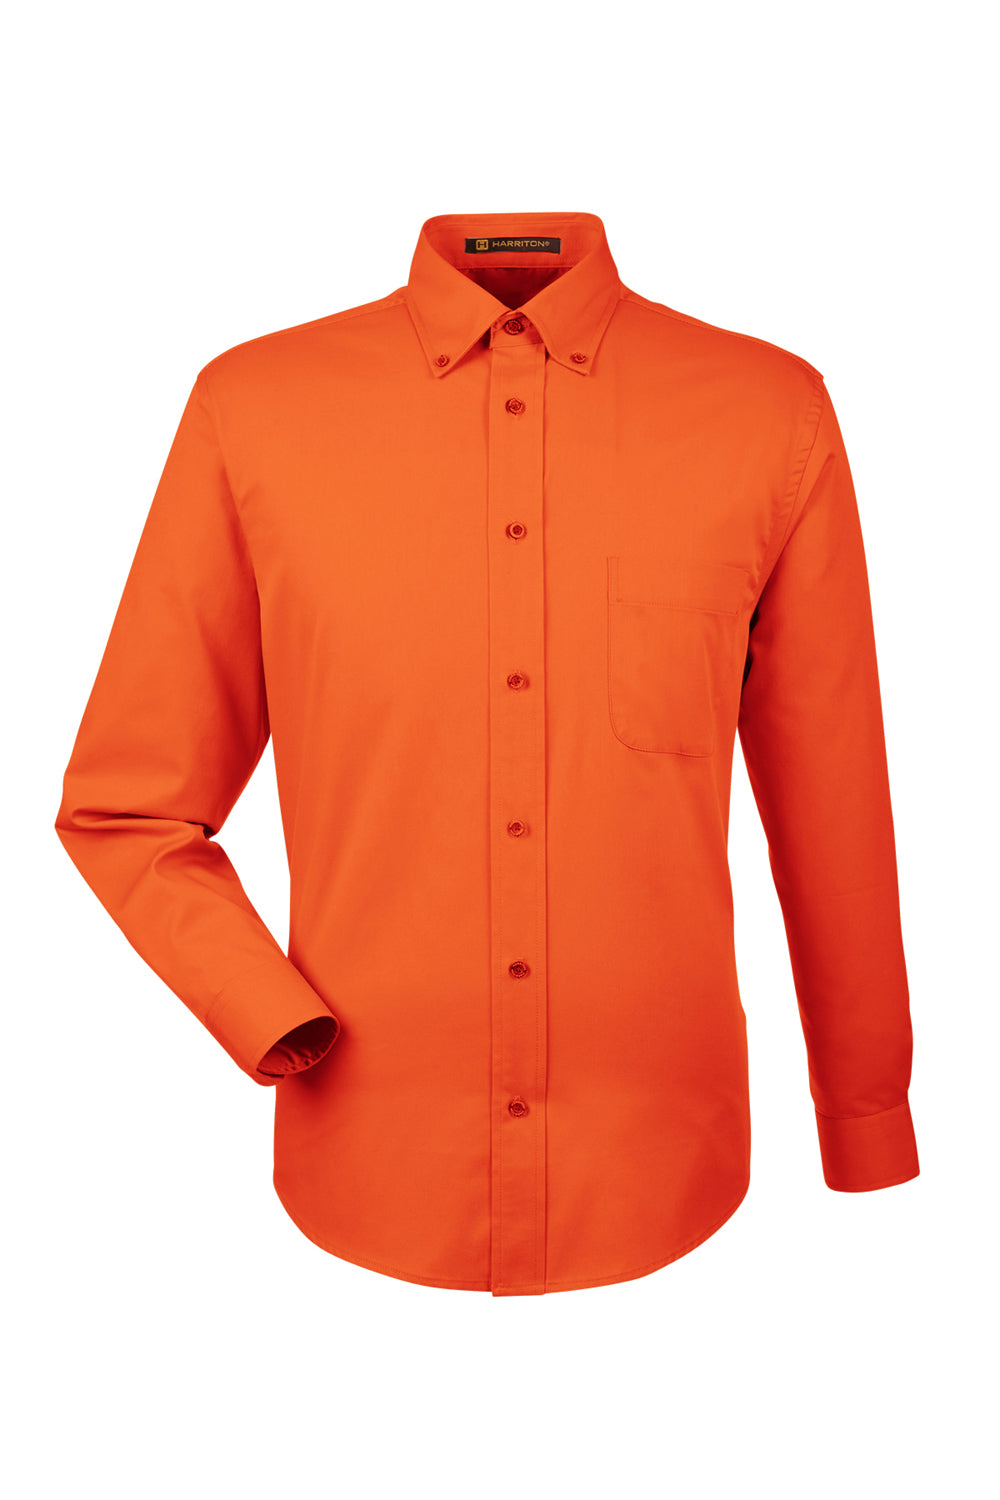 Harriton M500/M500T Wrinkle Resistant Long Sleeve Button Down Shirt w/ Pocket Team Orange Flat Front